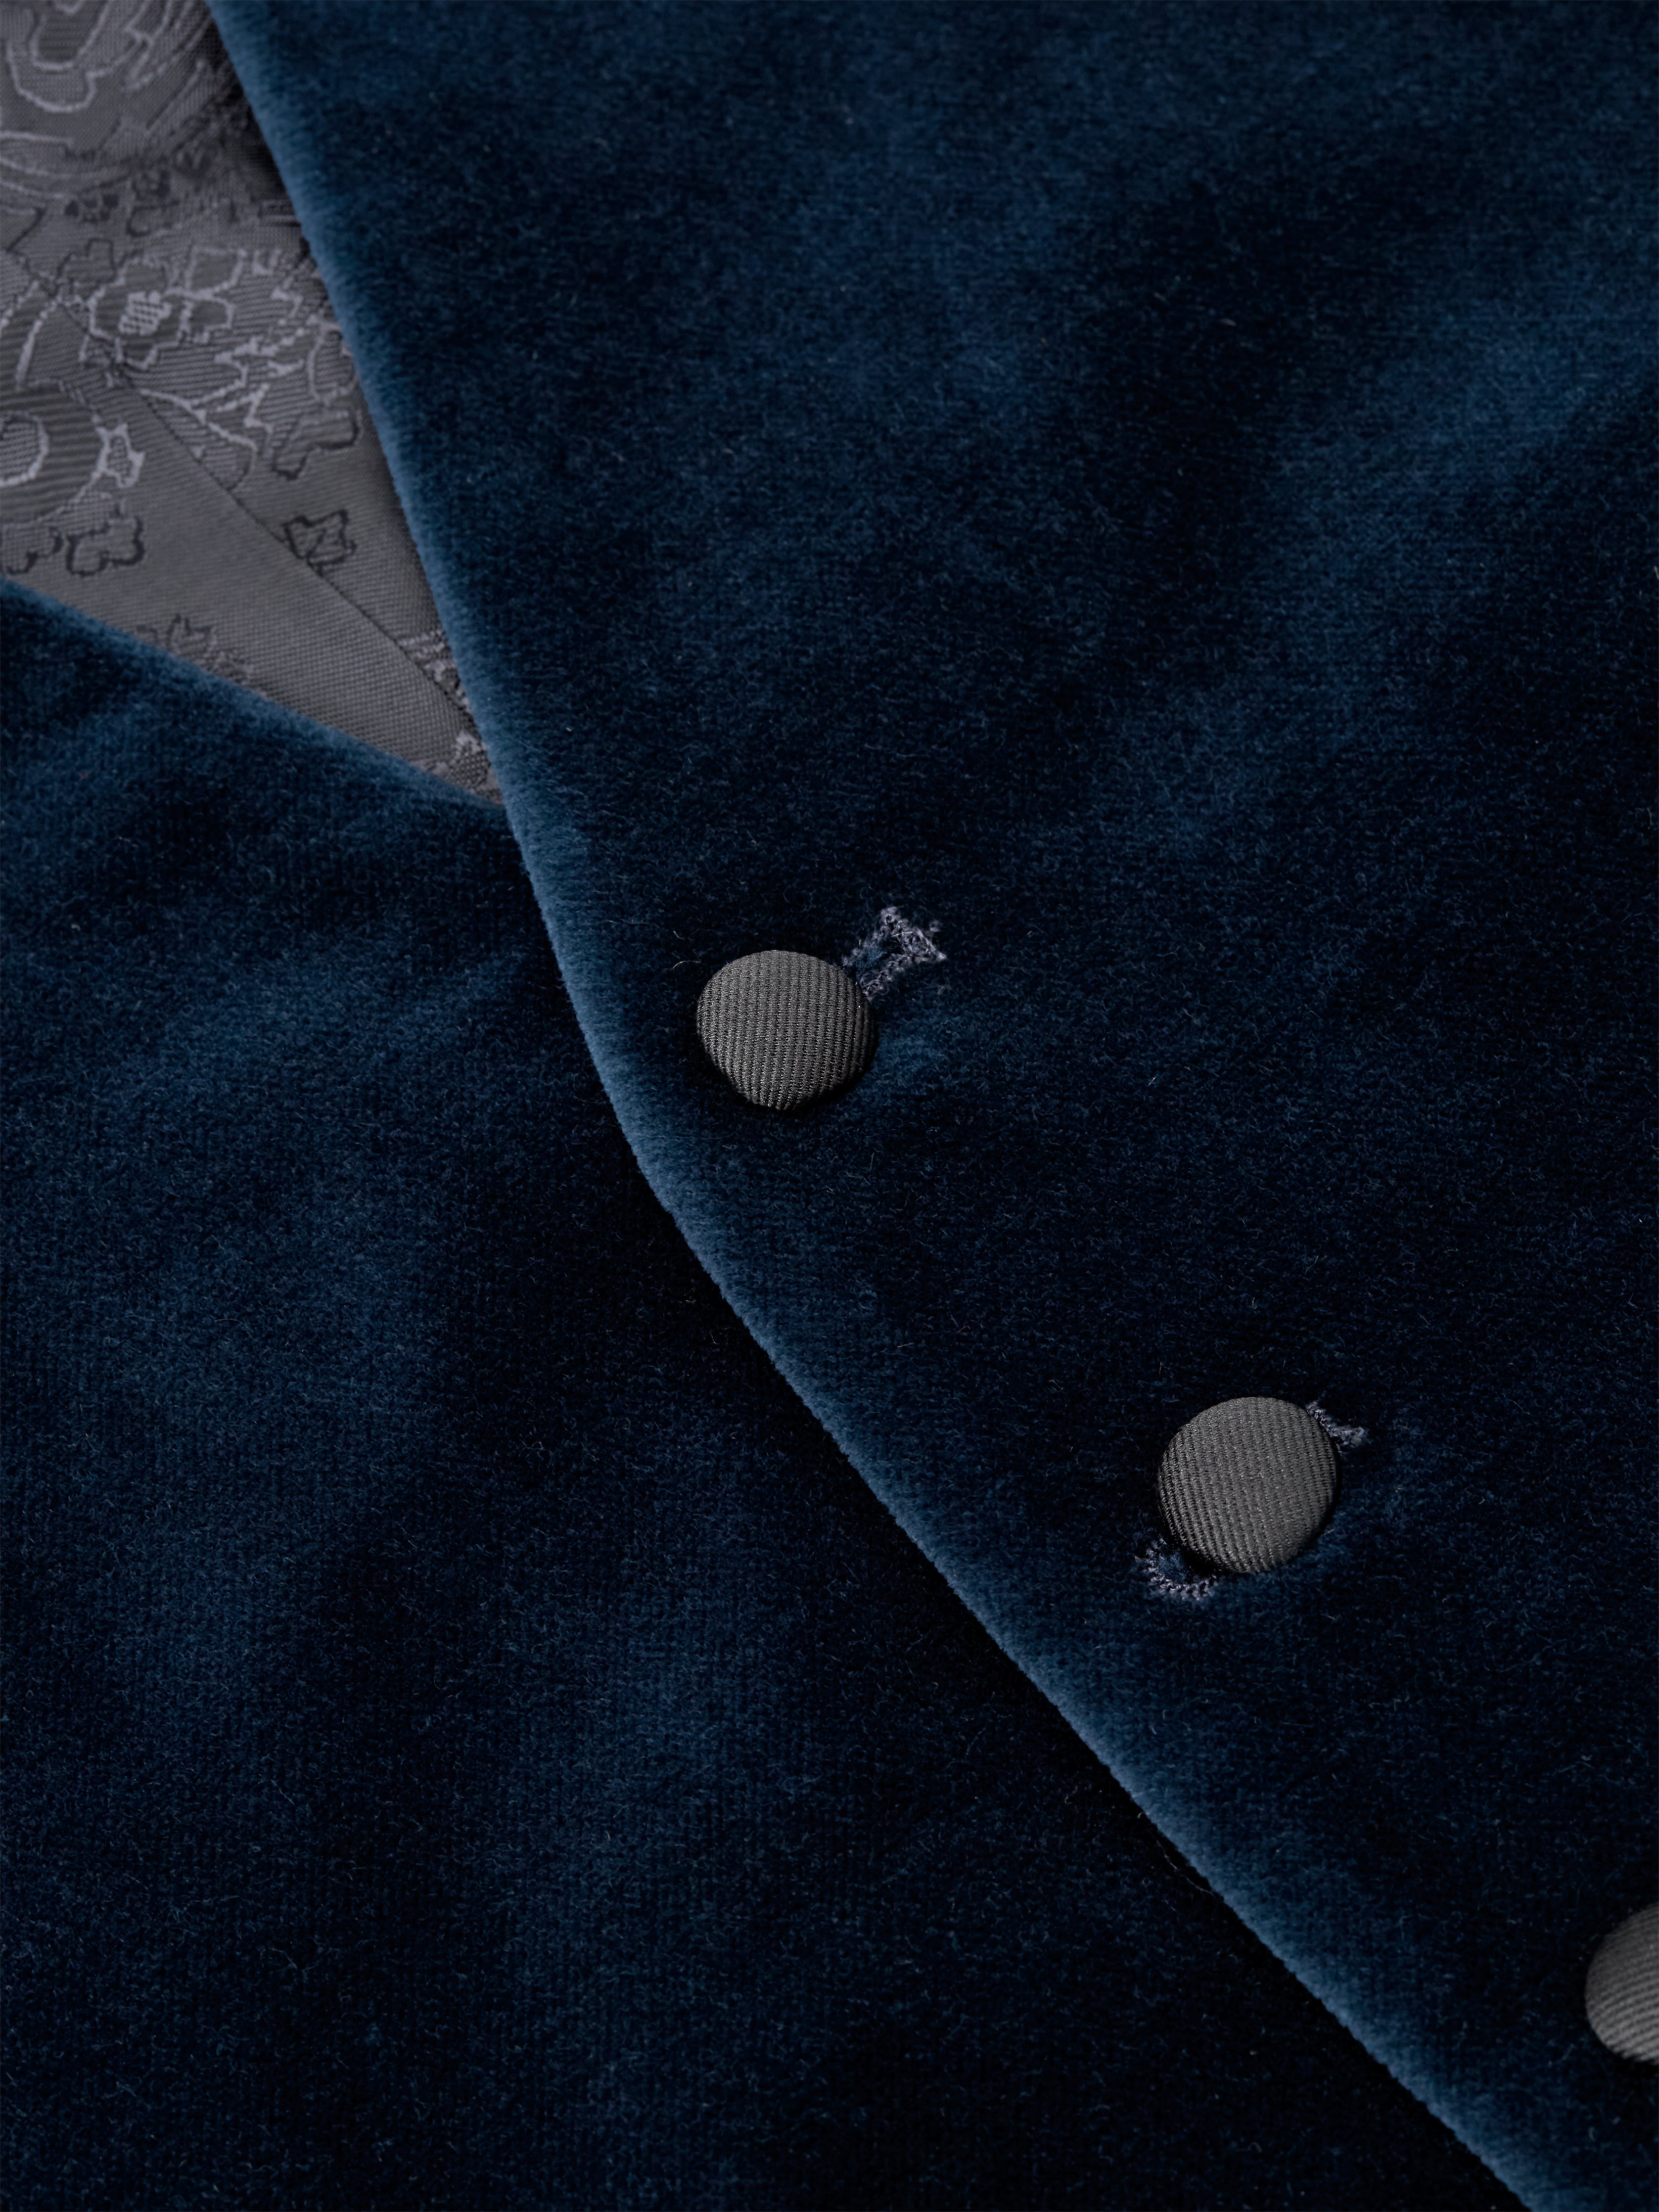 Sapphire Blue Velvet Cotton Single Breasted 6 Button Waistcoat ...